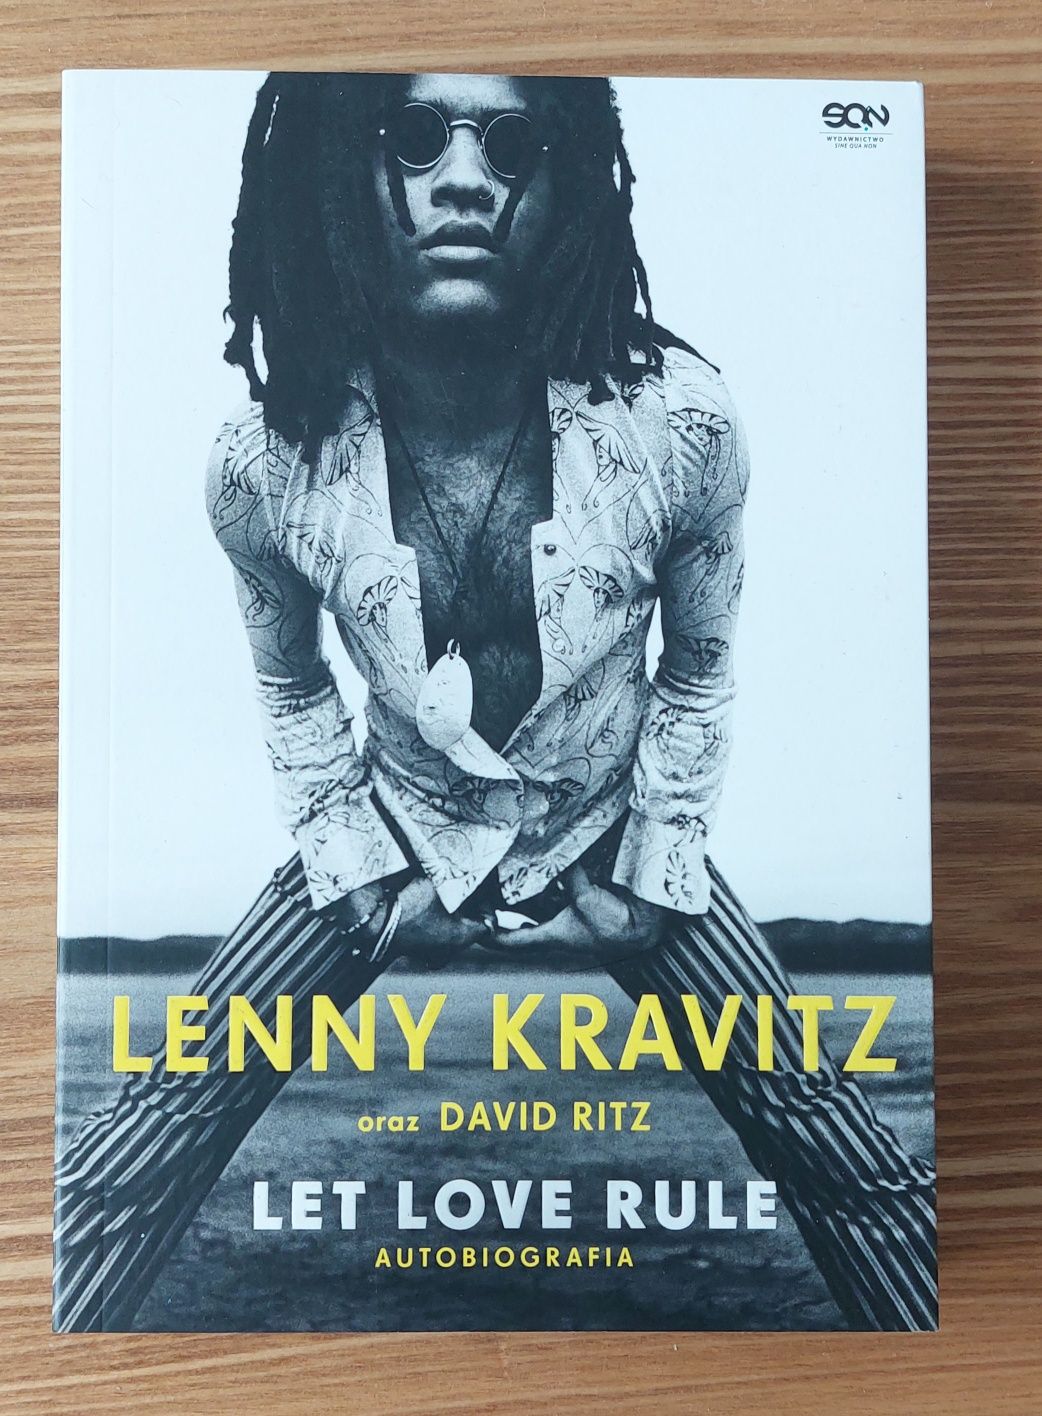 Książka "Lenny Kravitz - Let love rule - autobiografia"